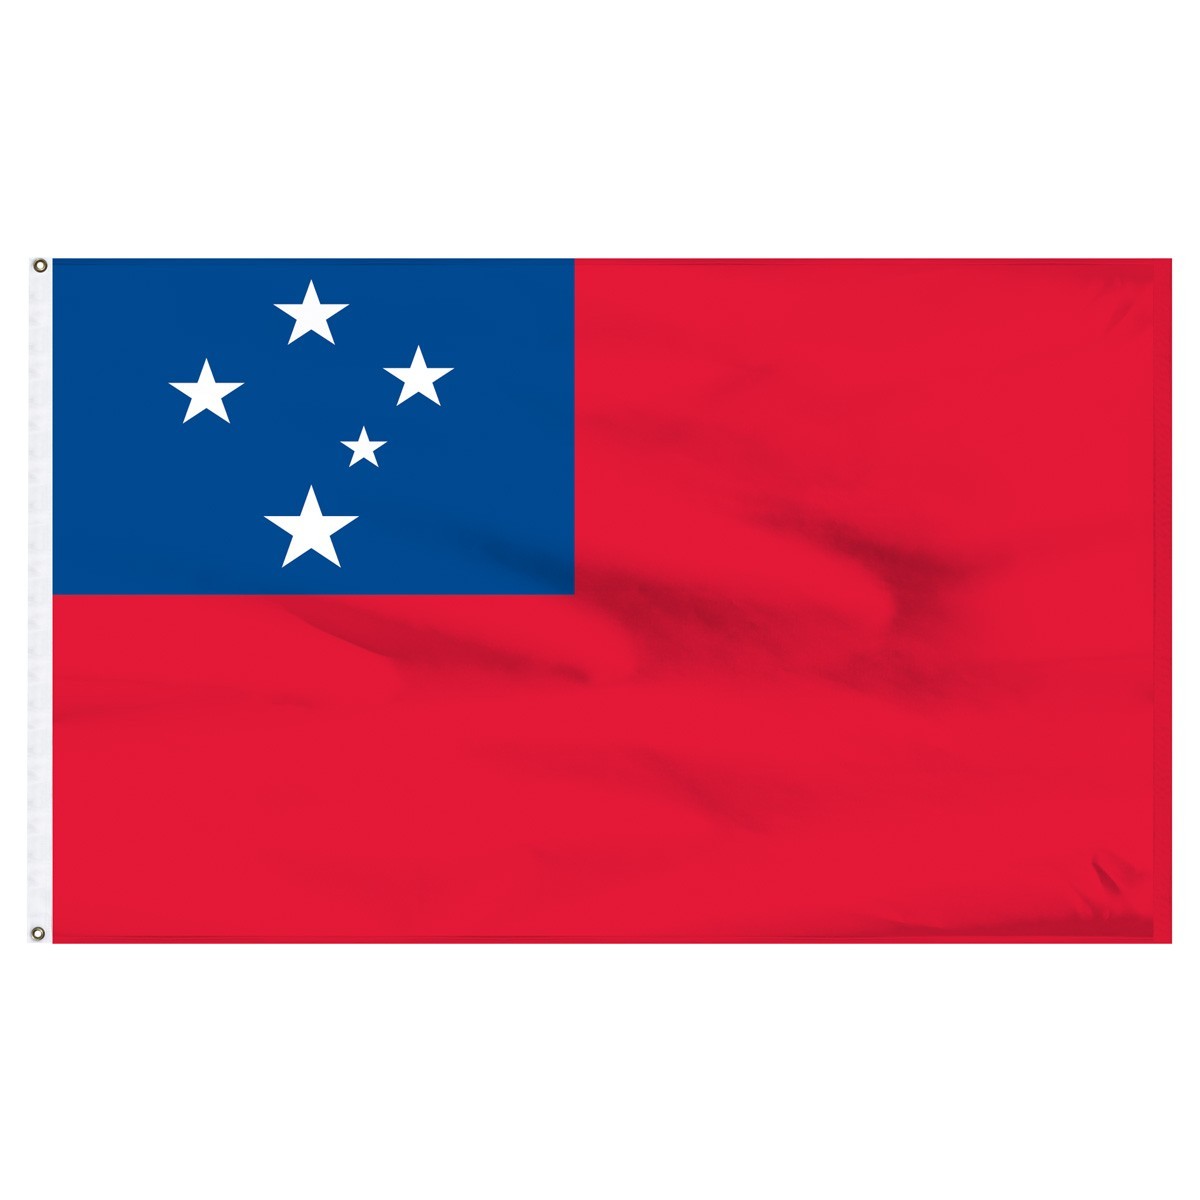 Bandera de nailon para exteriores de Samoa Occidental de 5 pies x 8 pies